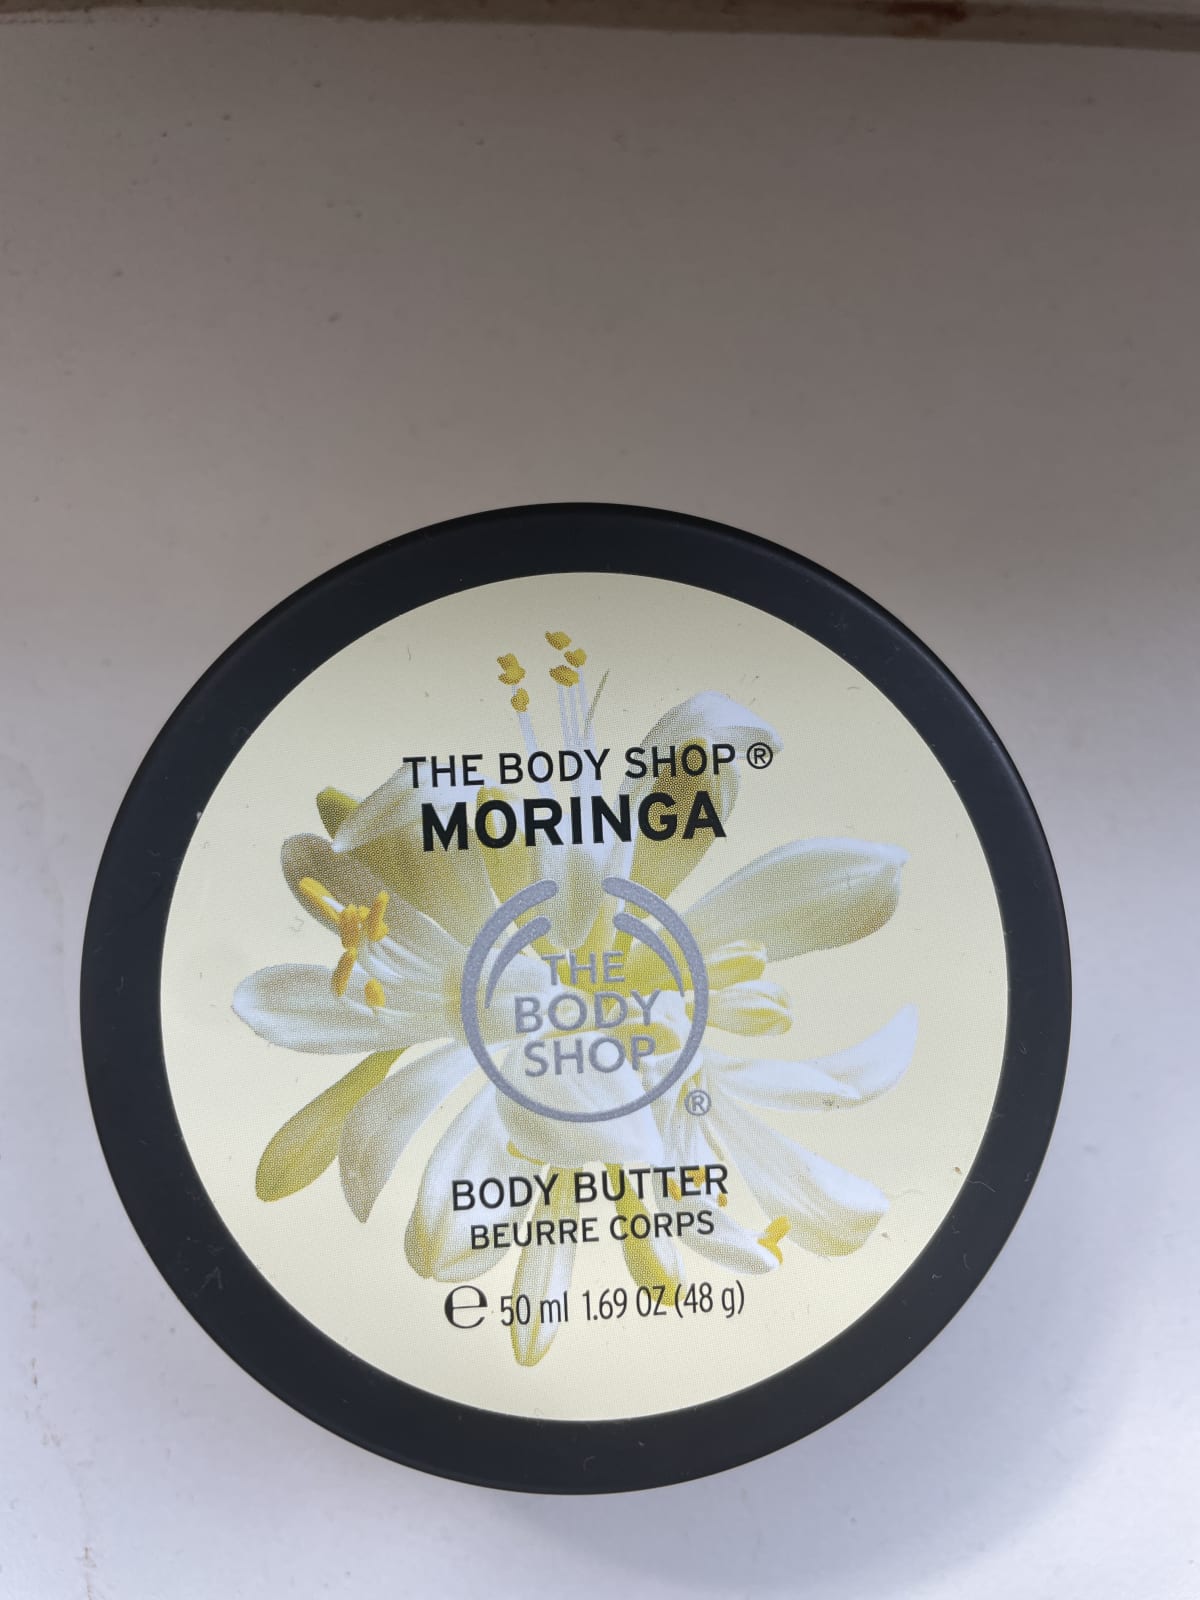 Moringa Body Butter - review image